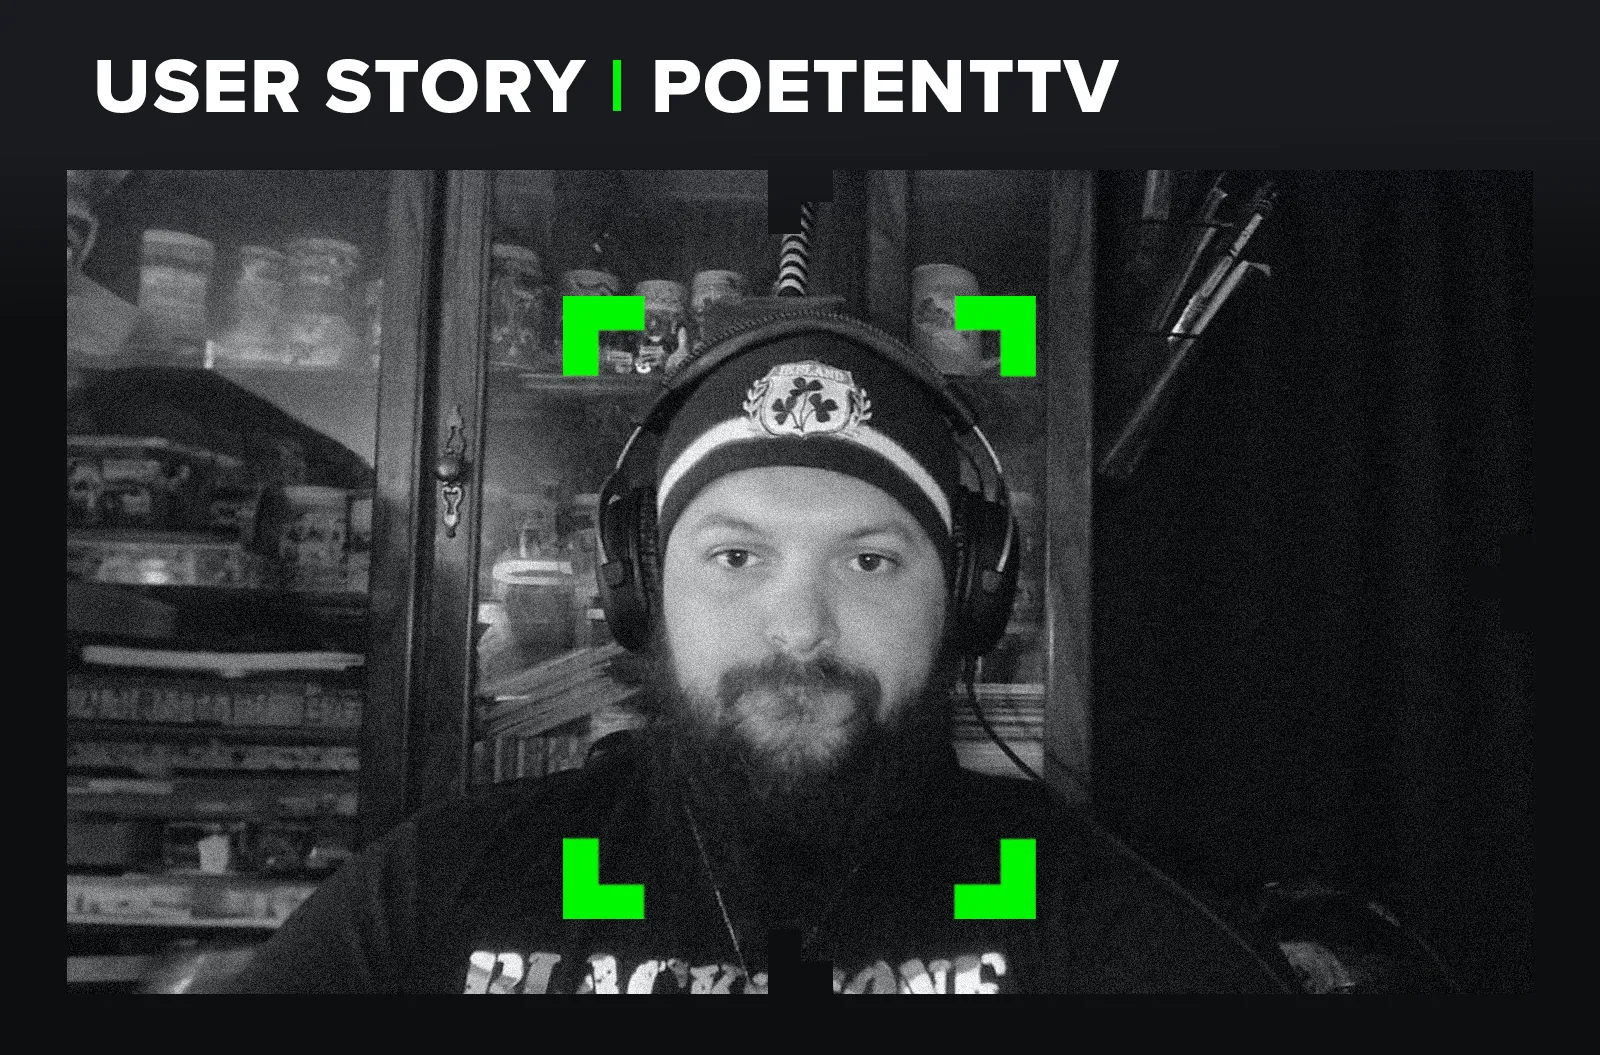 Poetenttv - User Story